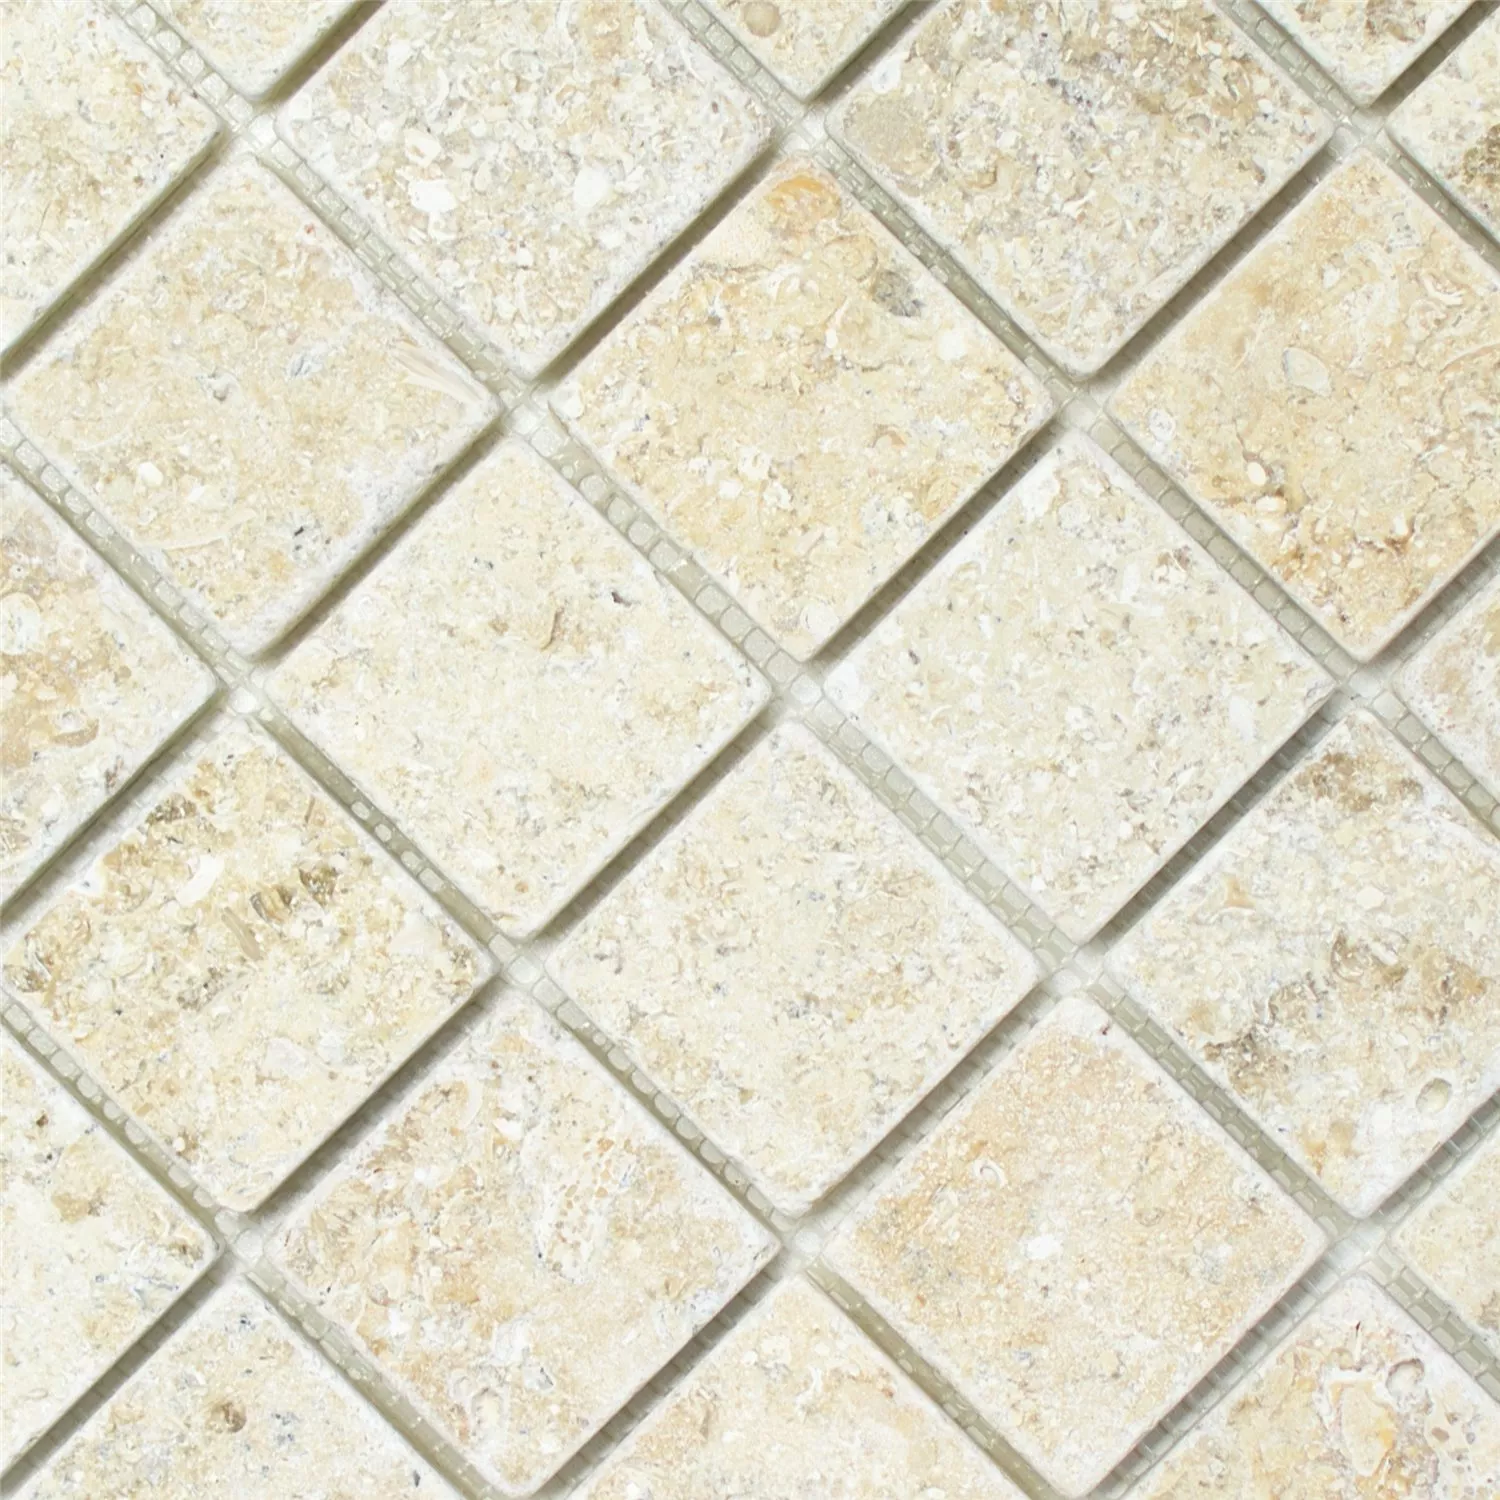 Mosaic Tiles Limestone Garbagna Beige 48